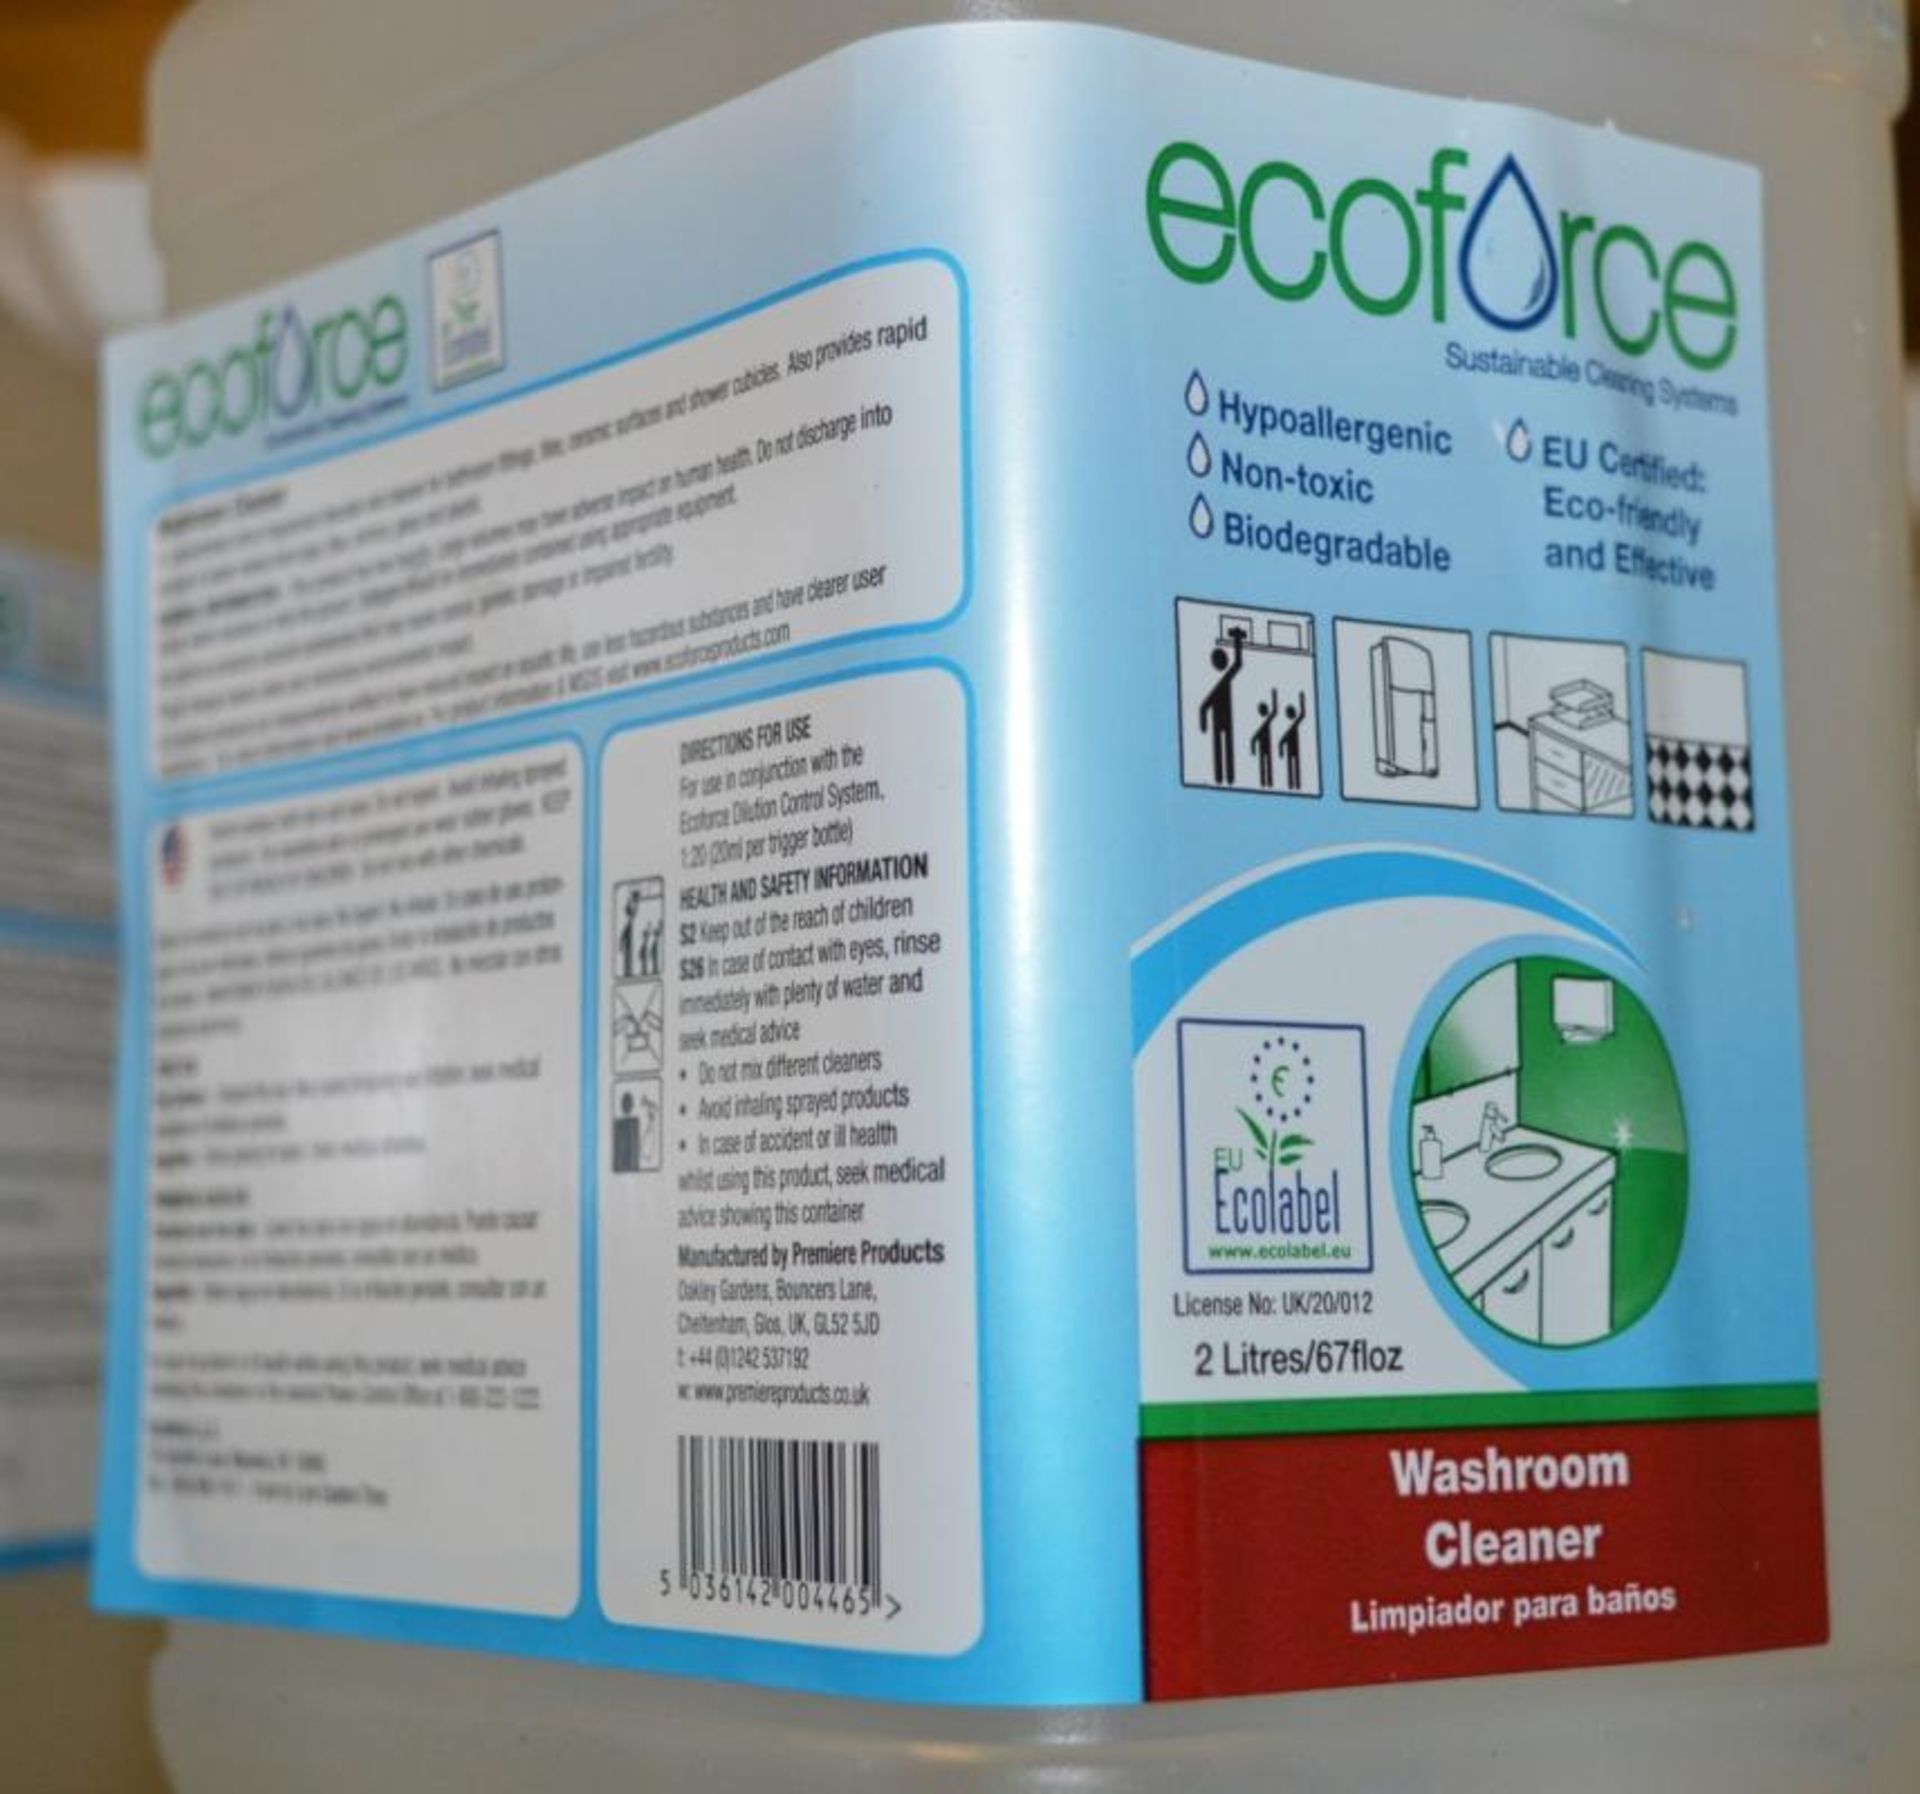 30 x Ecoforce 2 Liter Washroom Cleaner - Concentrated Citrus Fragraned Descaler and Cleaner - - Image 2 of 3